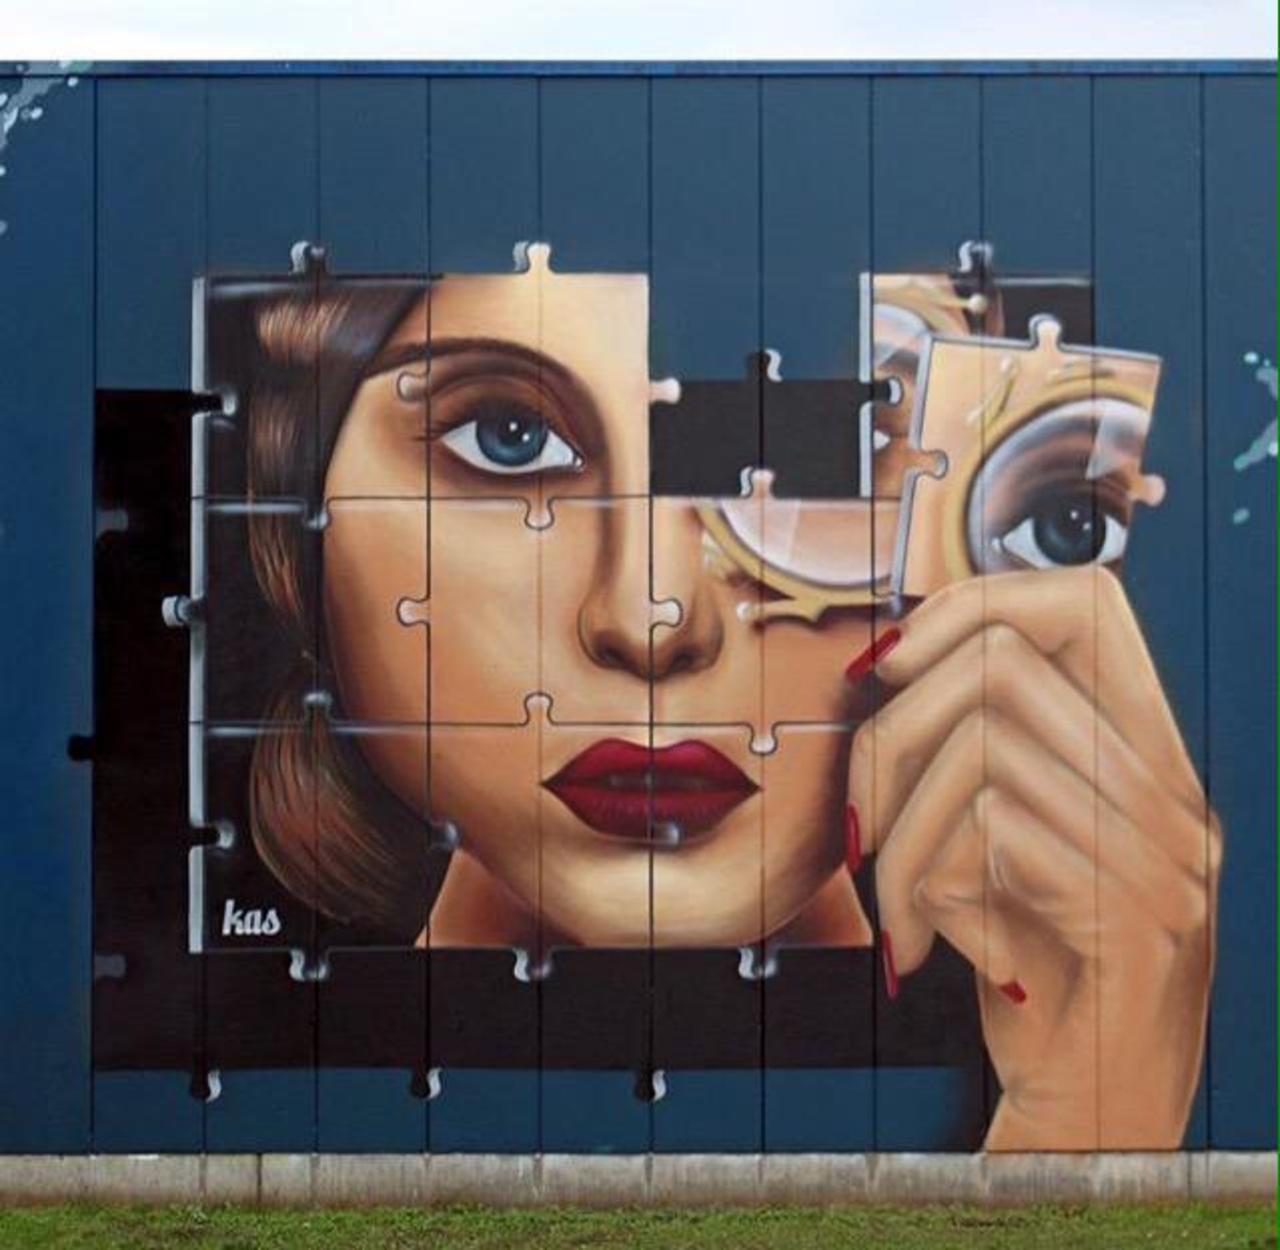 Kas Art's new Street Art "Piece of me" in Aalst Belgium 

#art #graffiti #mural #streetart http://t.co/whwgJOwHDV